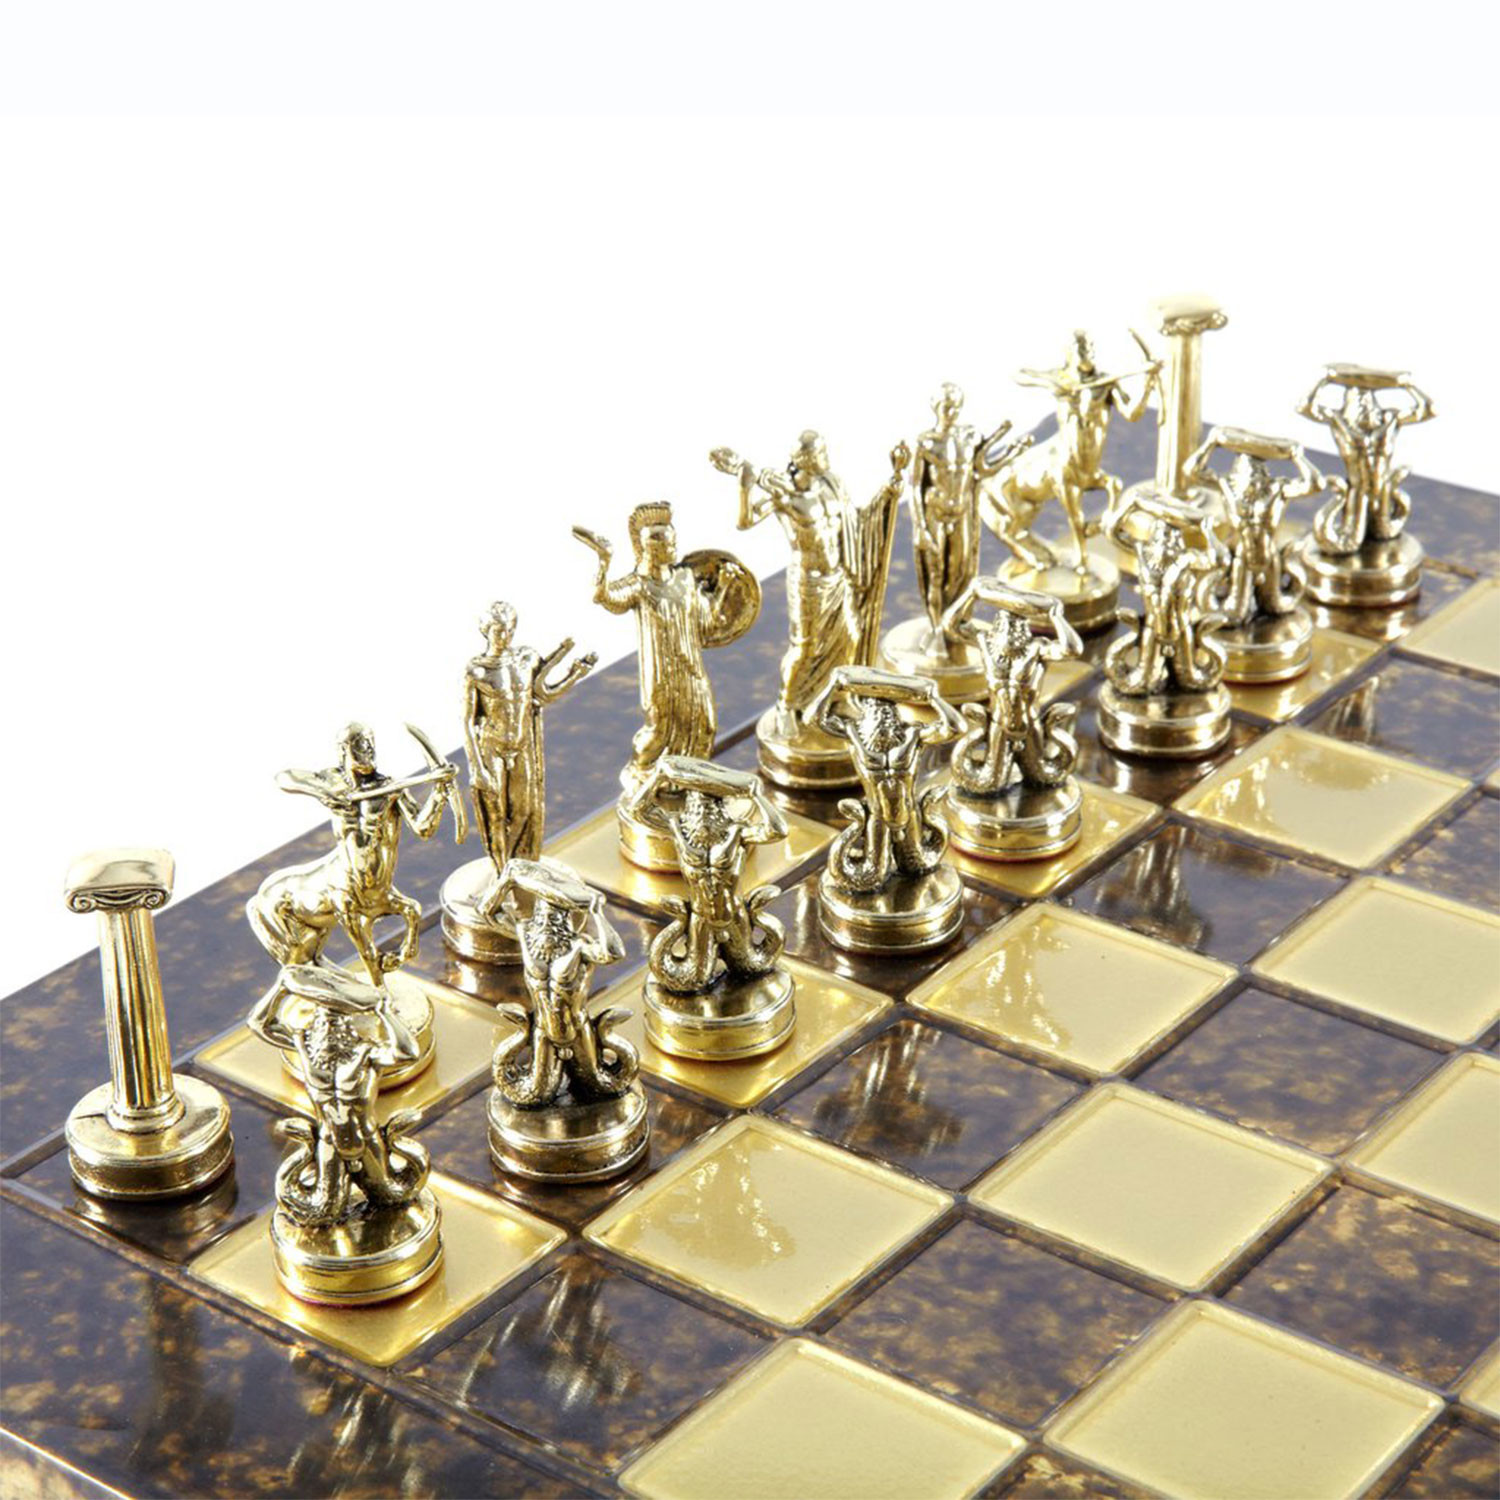 Battle of the Titans Chess Set - Hellenic Art - Touch of Modern